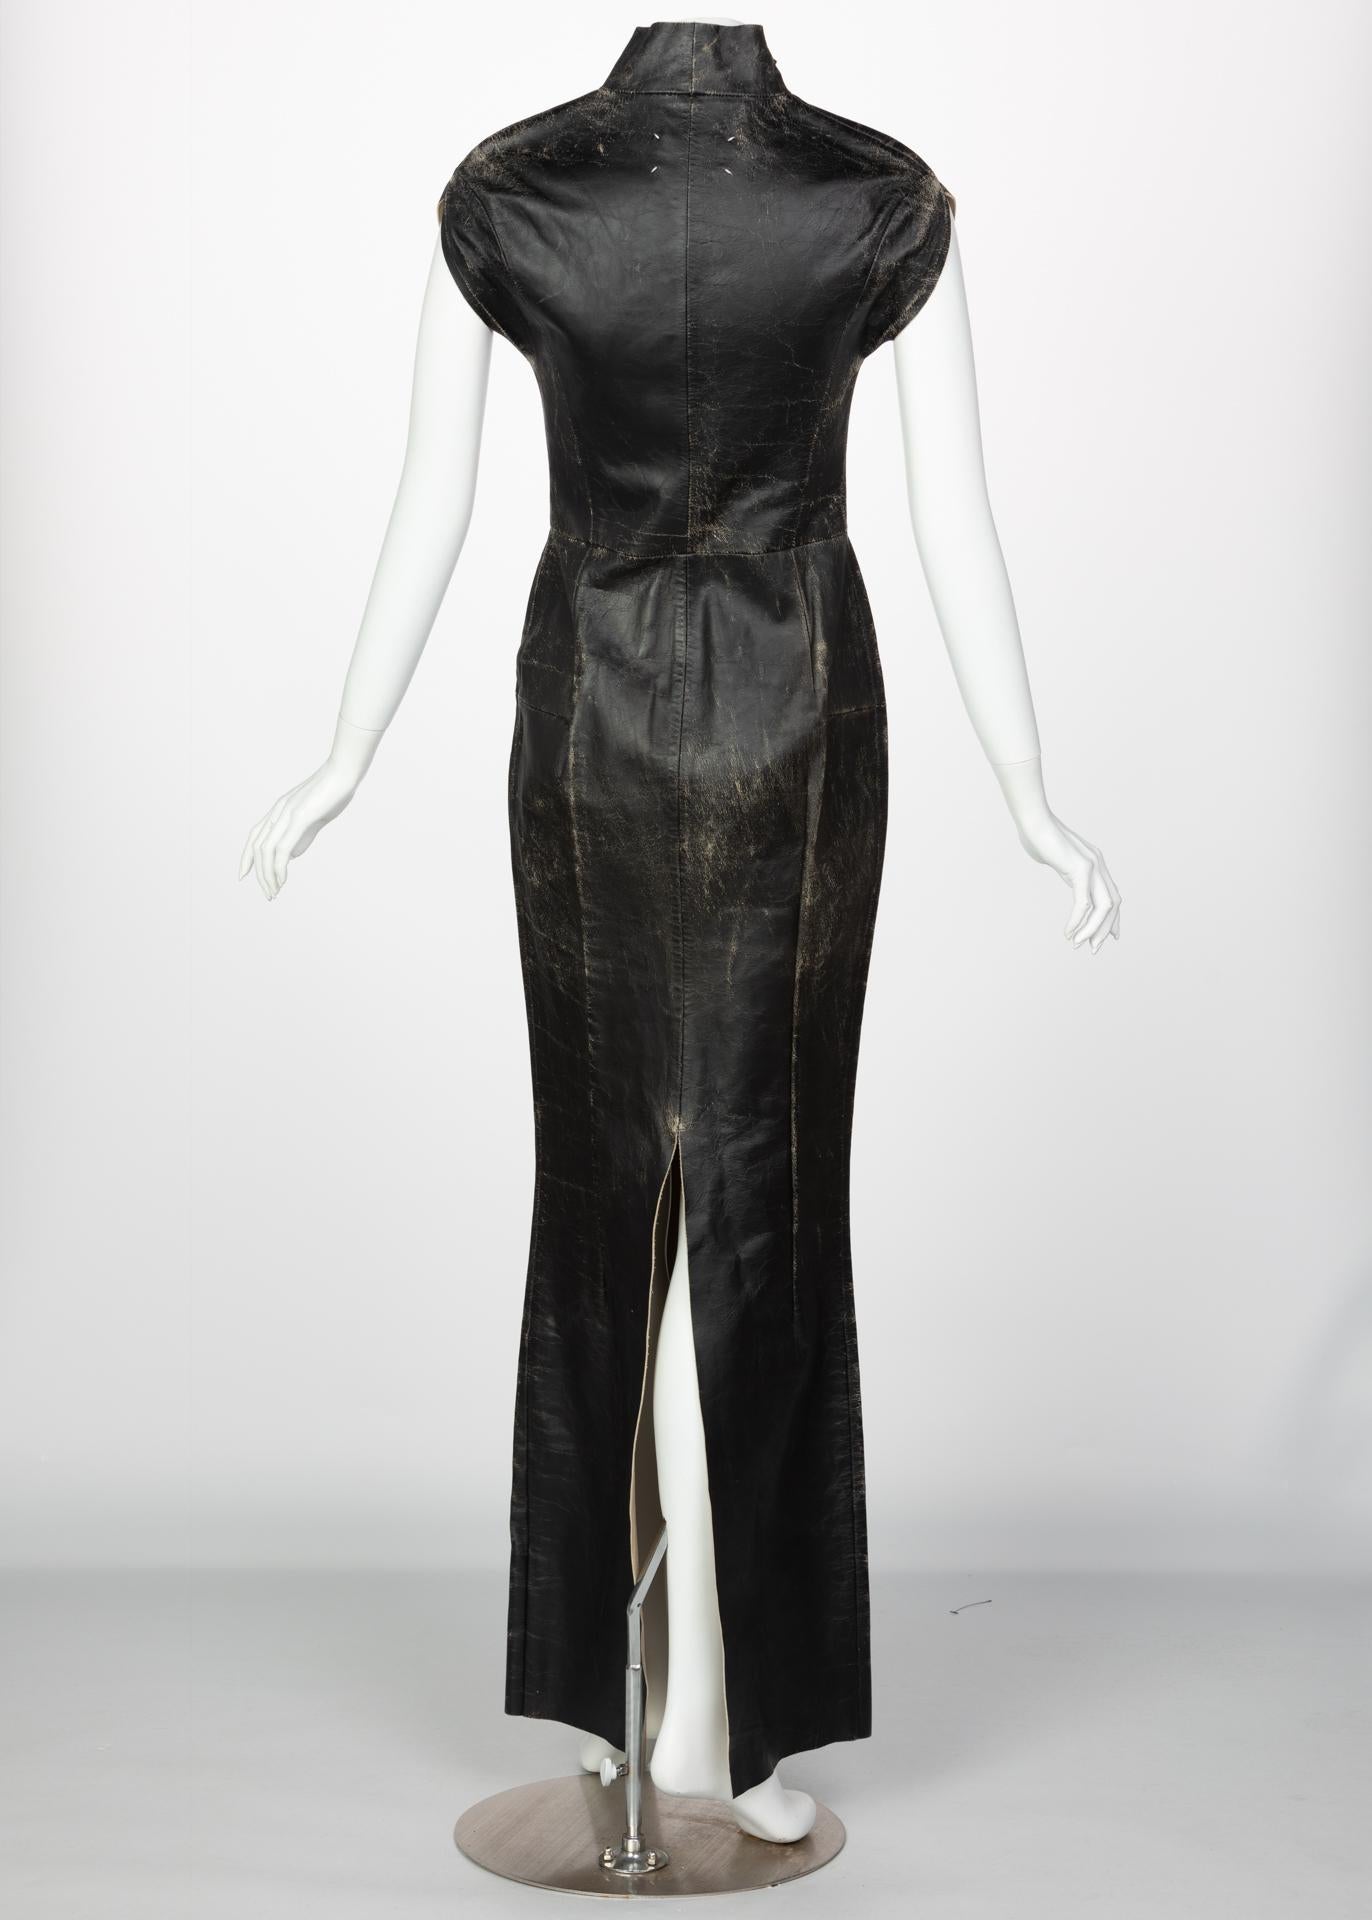 Maison Martin Margiela White Label Black Leather Zipper Dress, 2012 In Excellent Condition In Boca Raton, FL